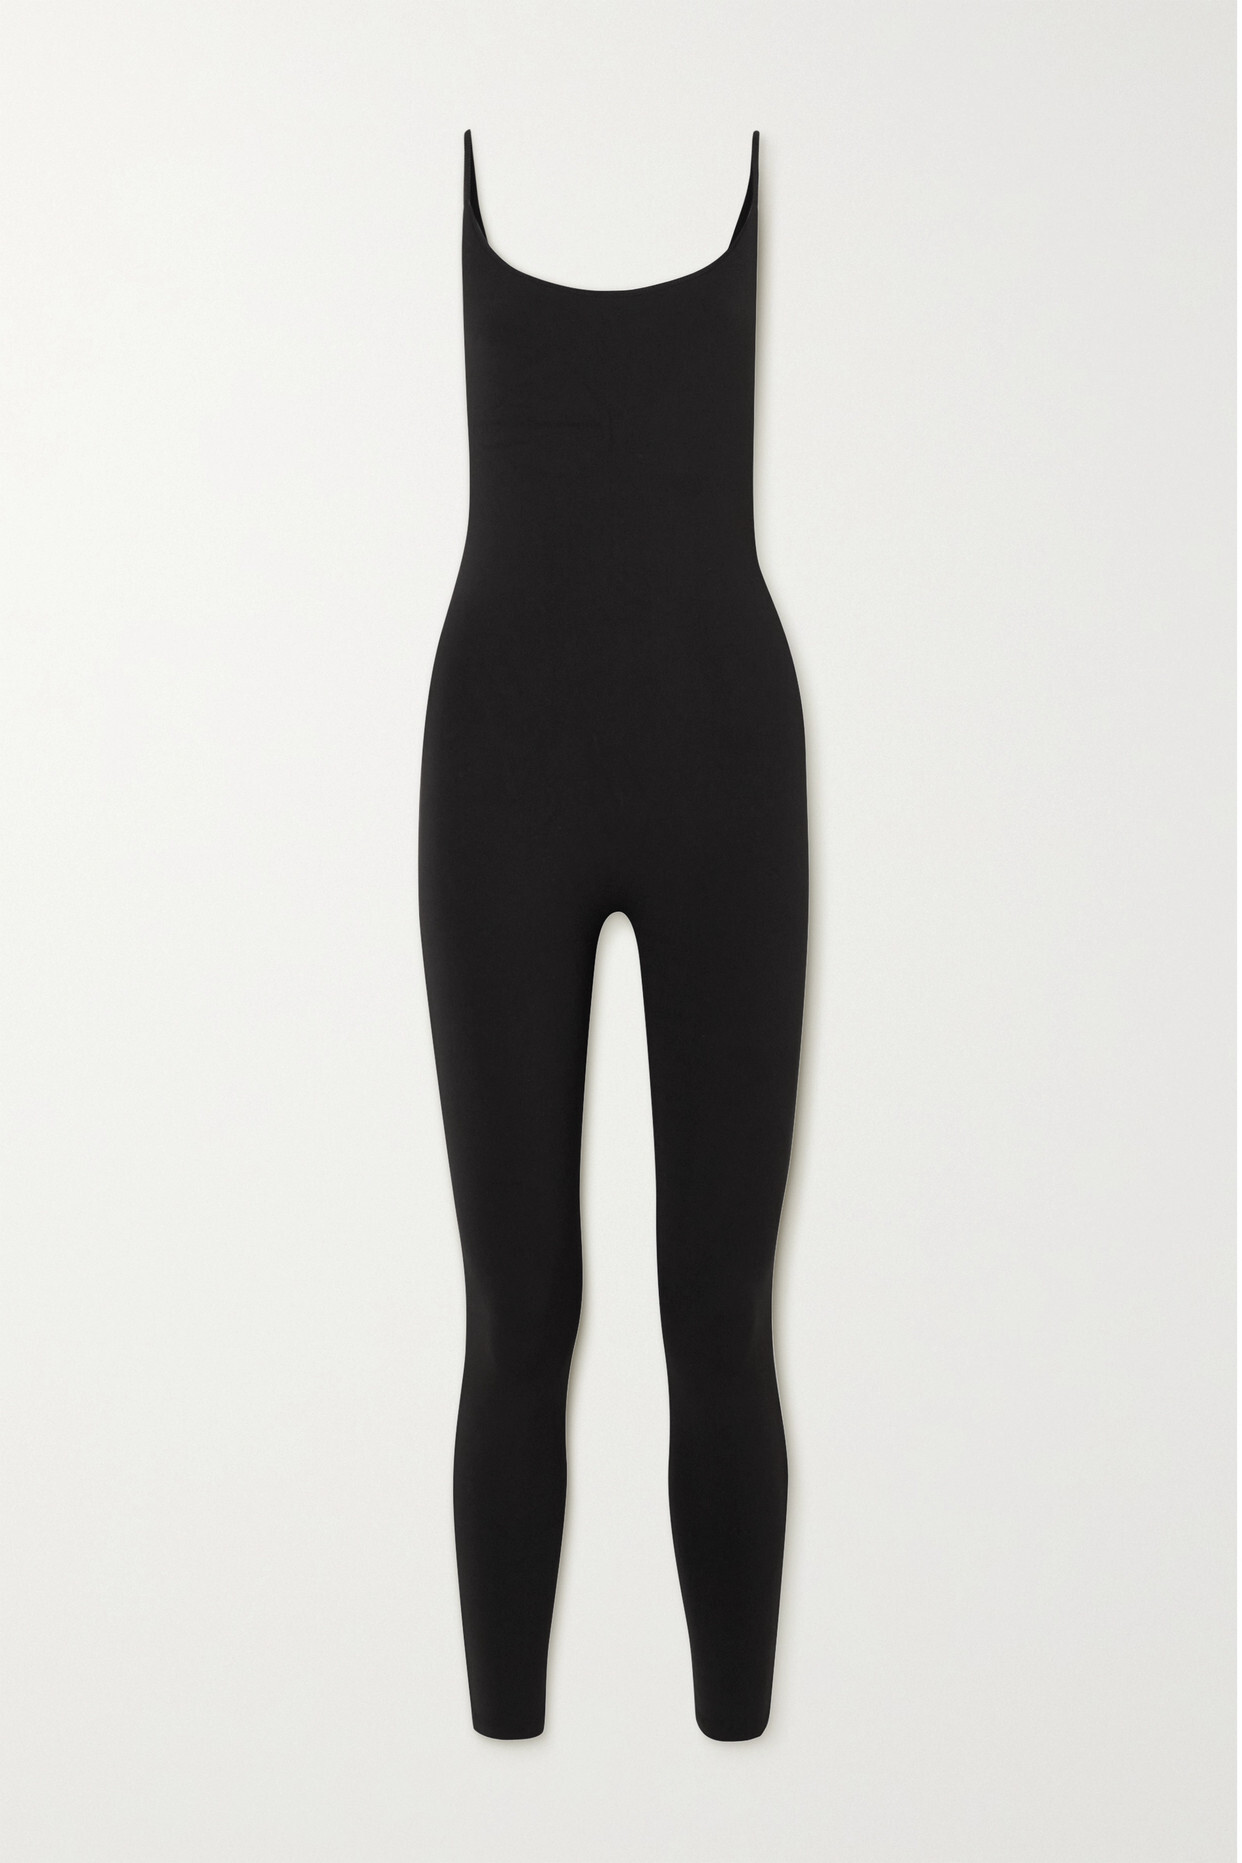 Skin - The Romy Stretch Jumpsuit - Black